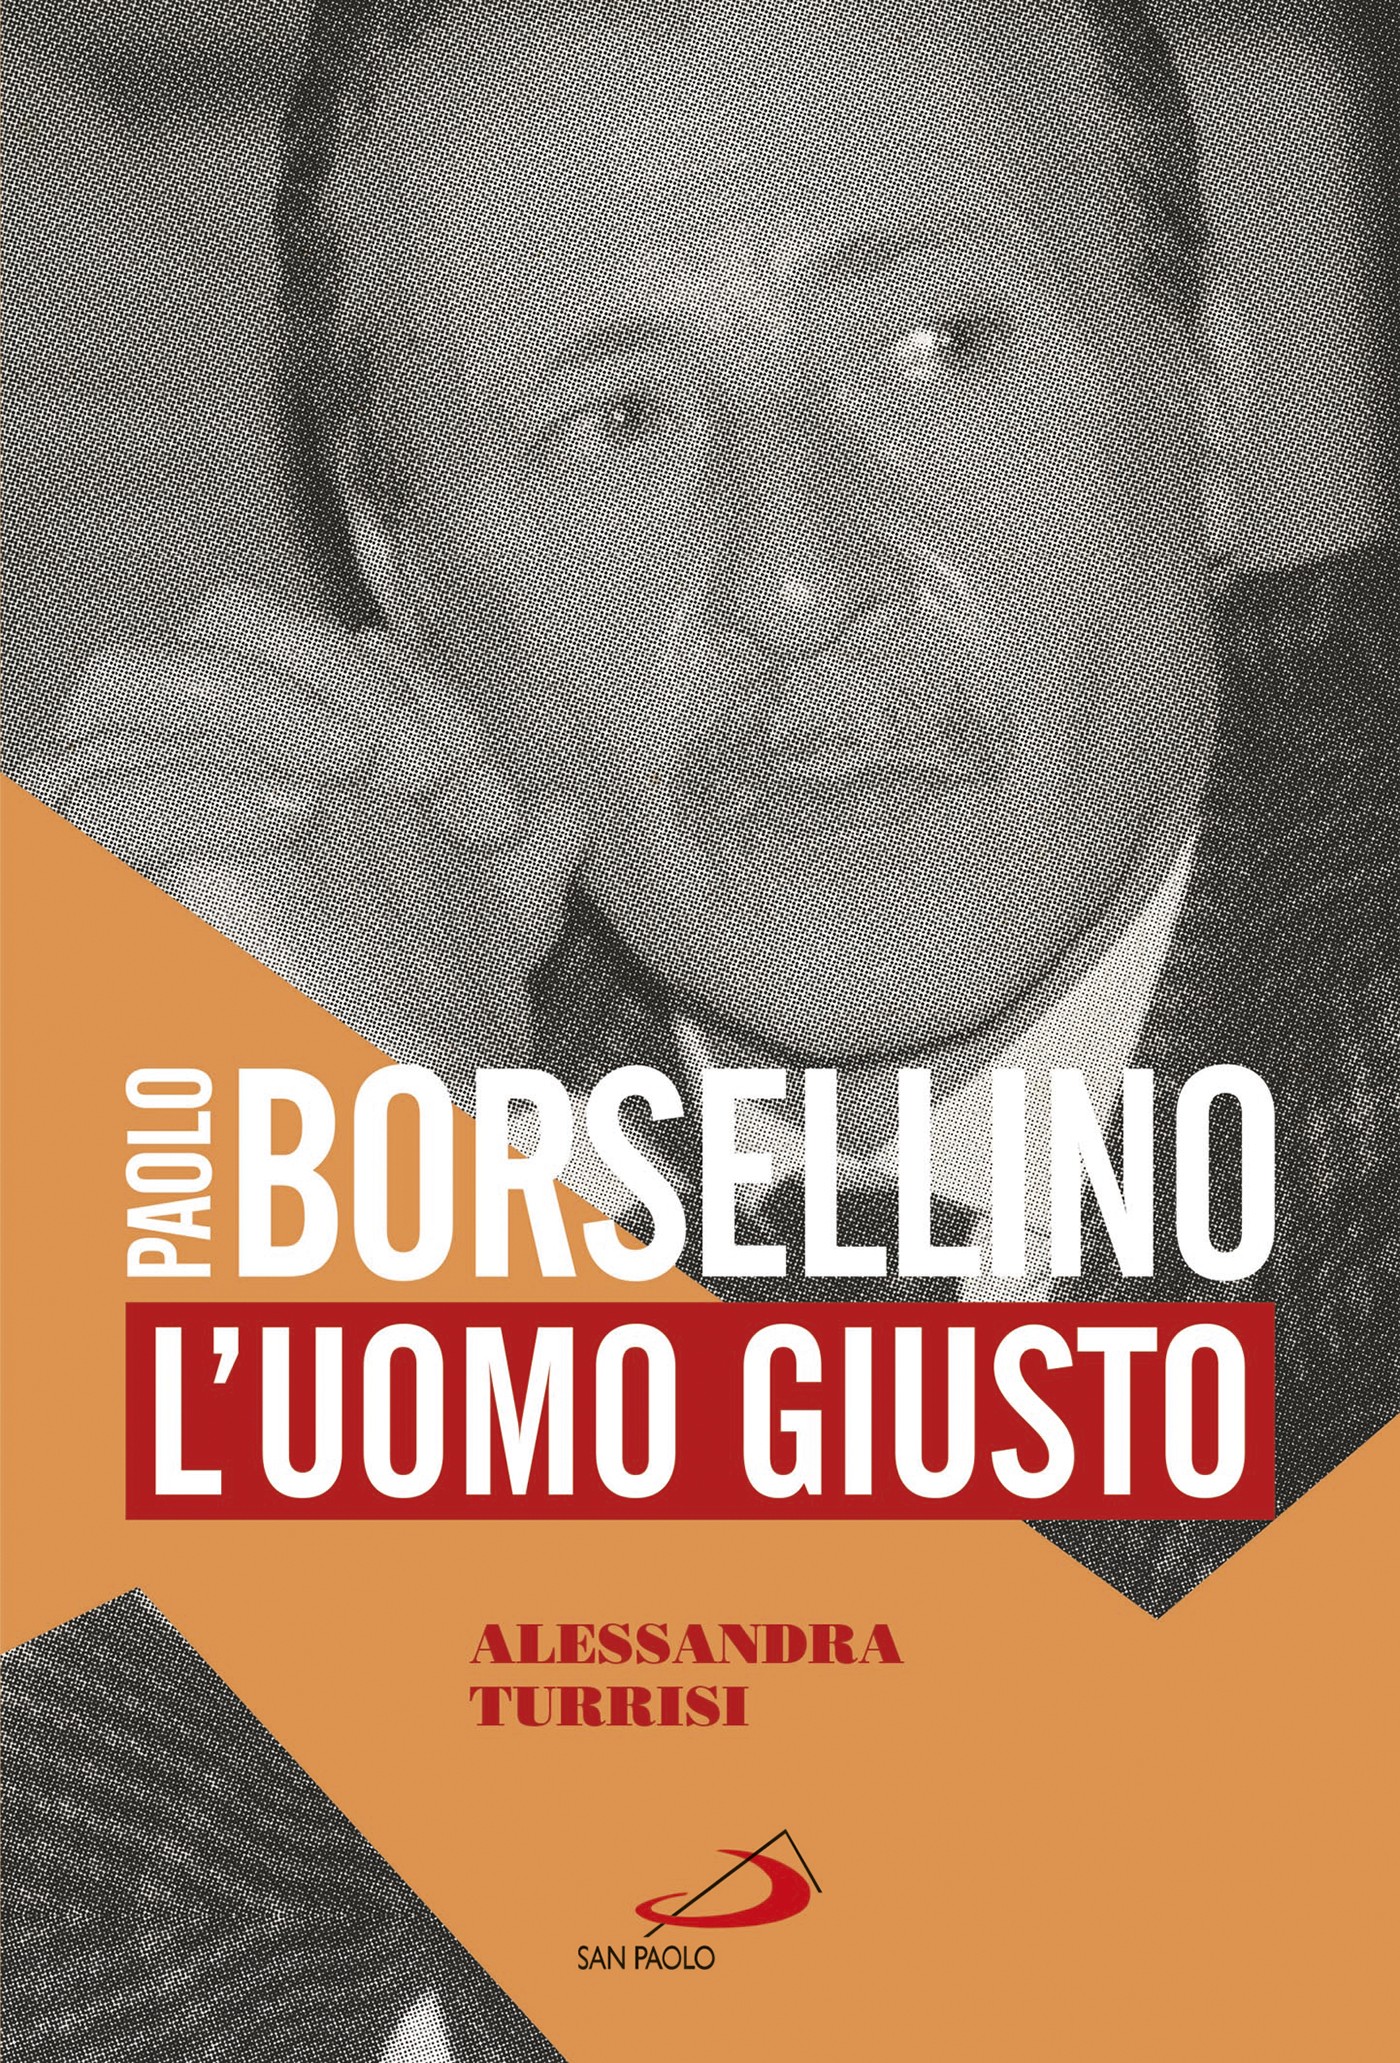 Paolo Borsellino - Librerie.coop